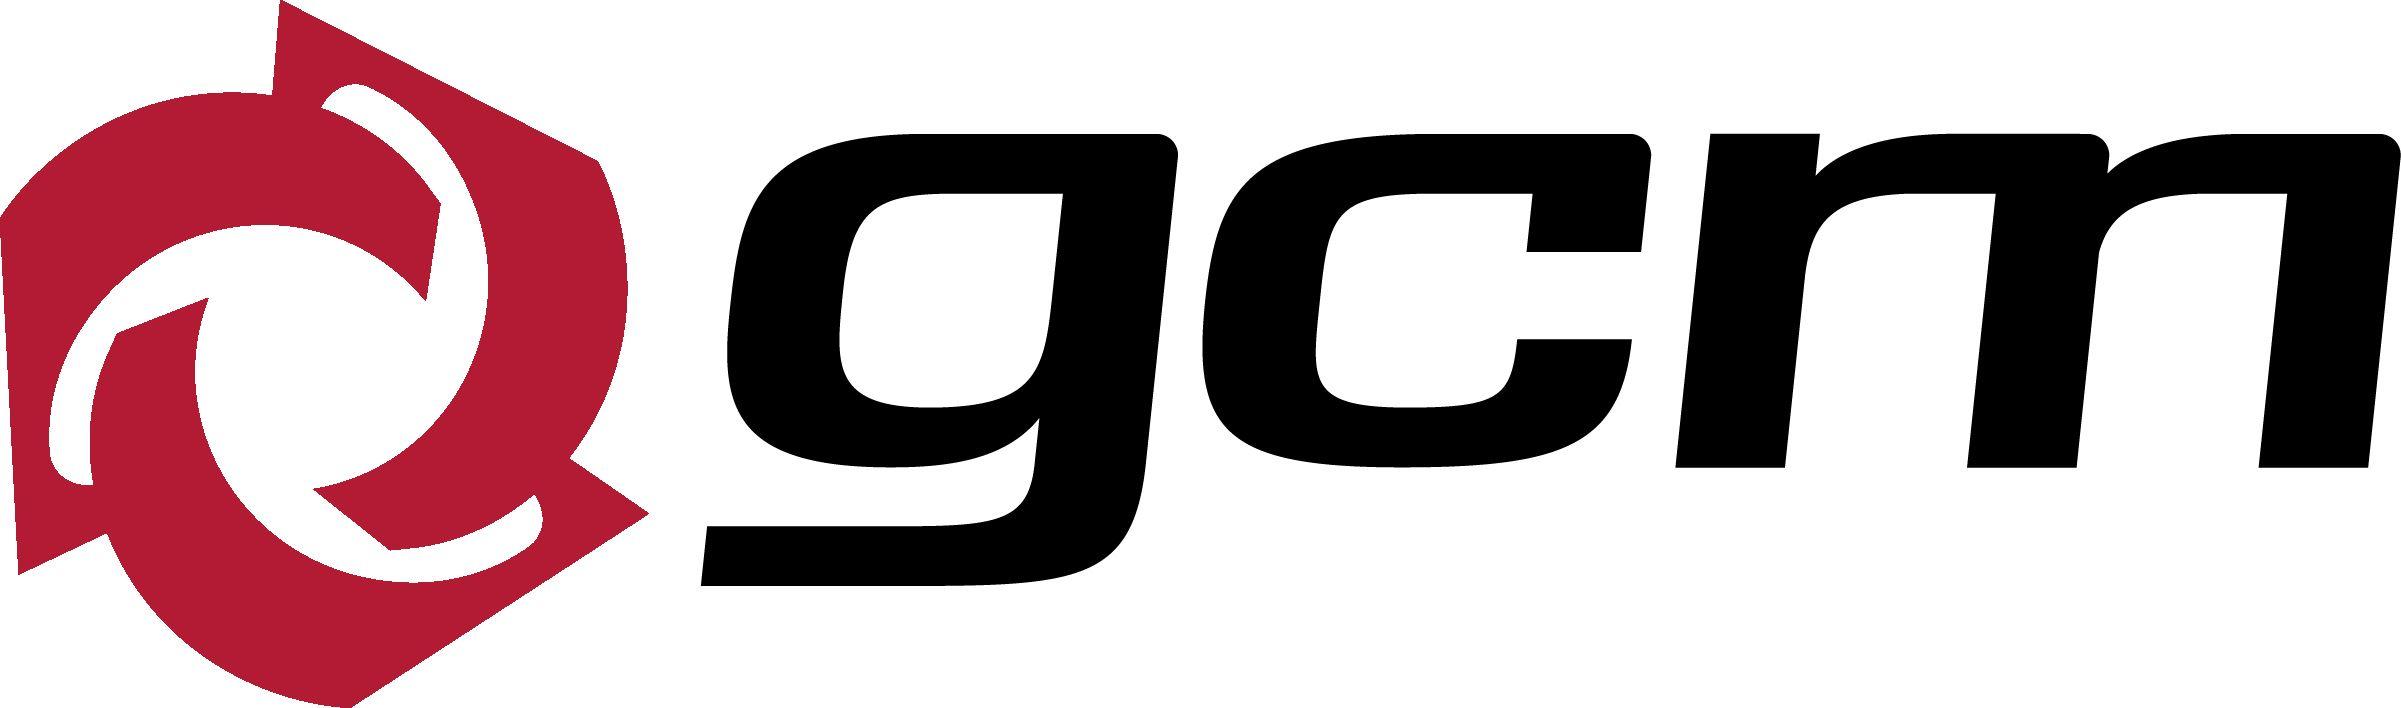 GCM Logo - GCM Logo Regular : Eric Asp